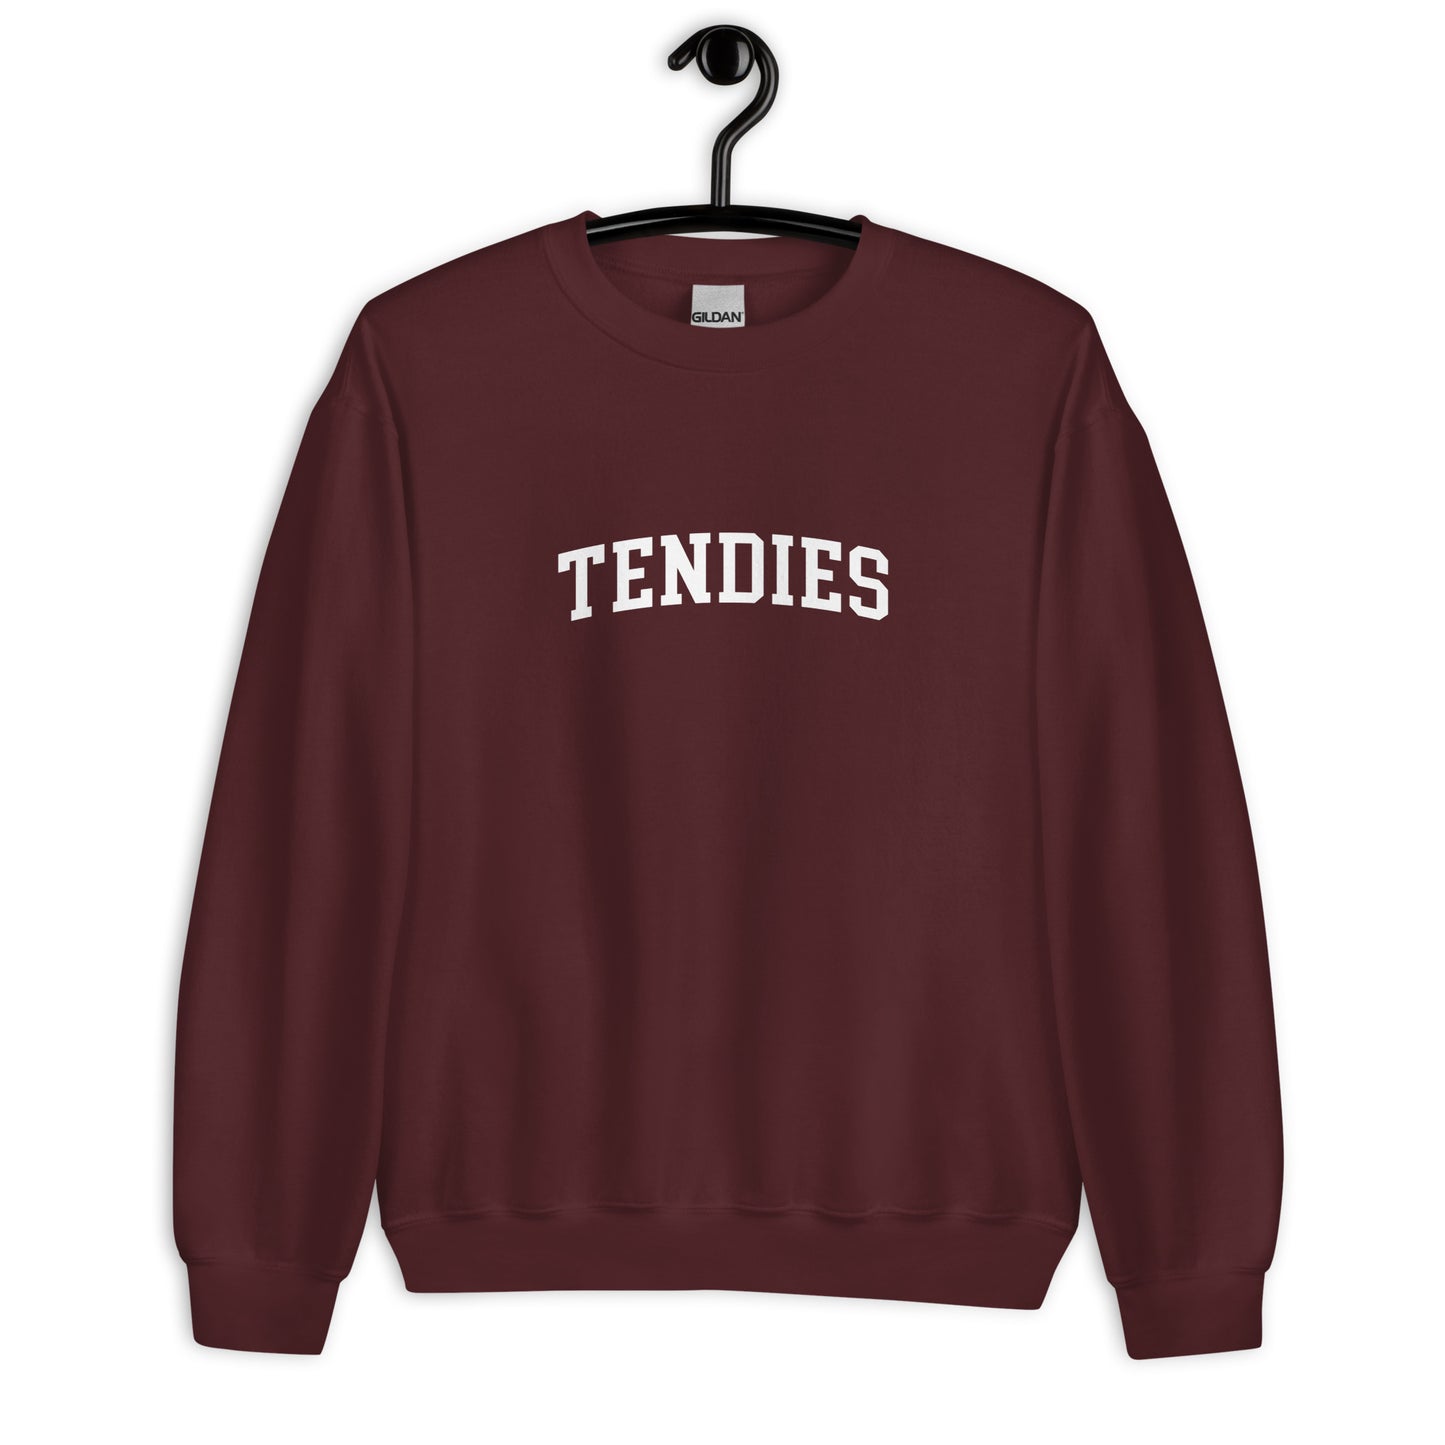 Tendies Sweatshirt - Arched Font